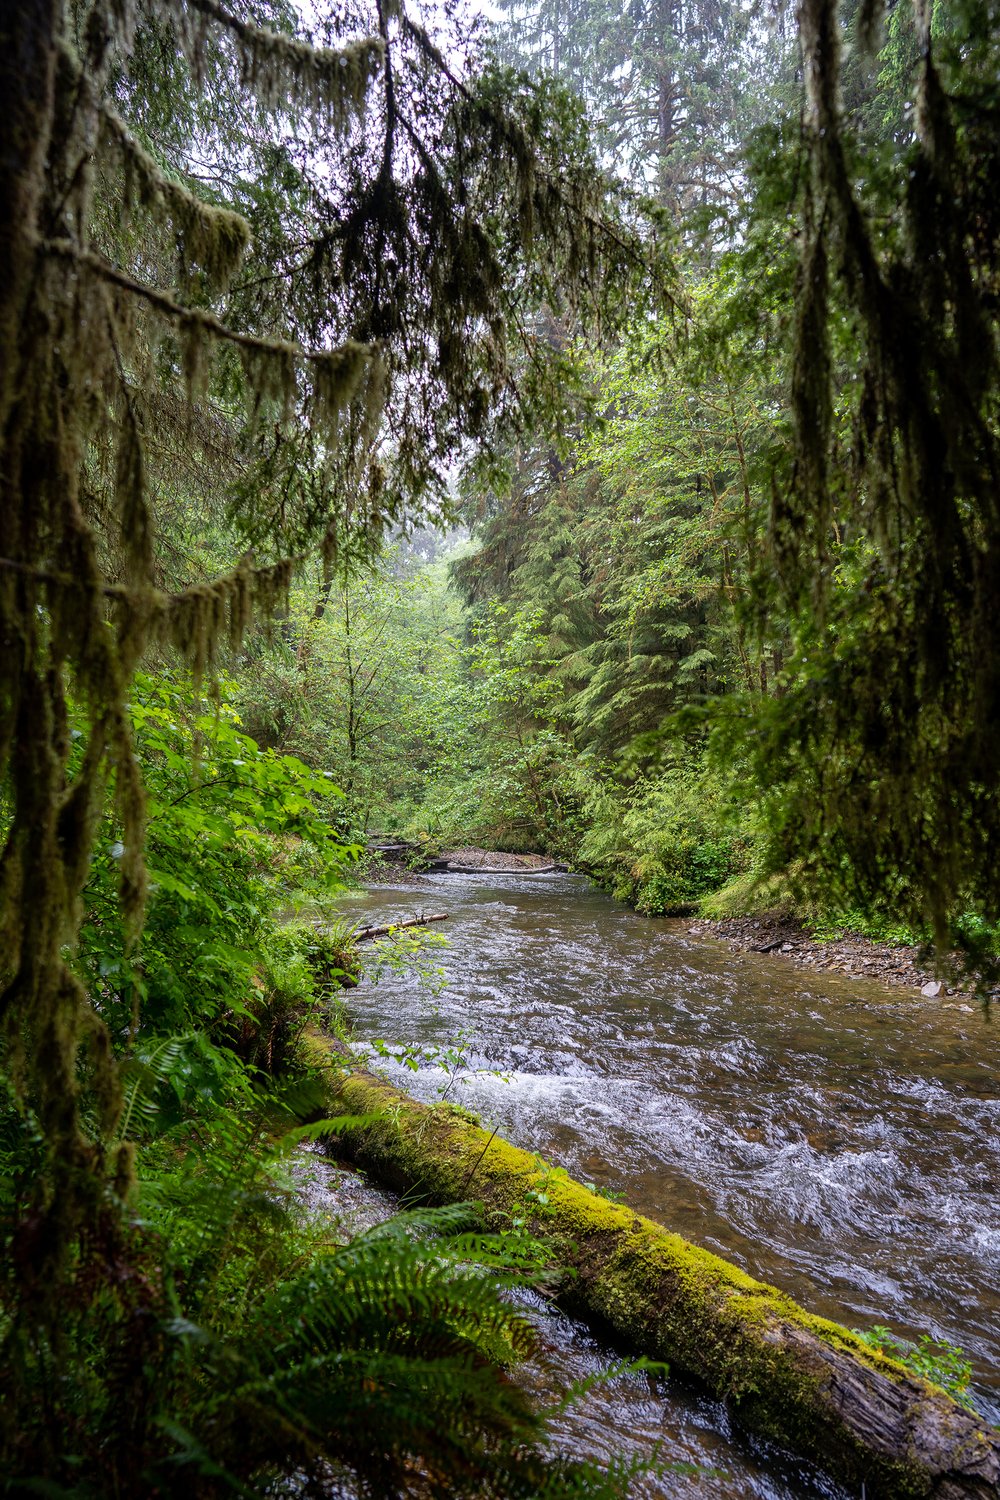 A photo of Ellsworth Creek flowing through rainforest trees, like Sitka spruce.